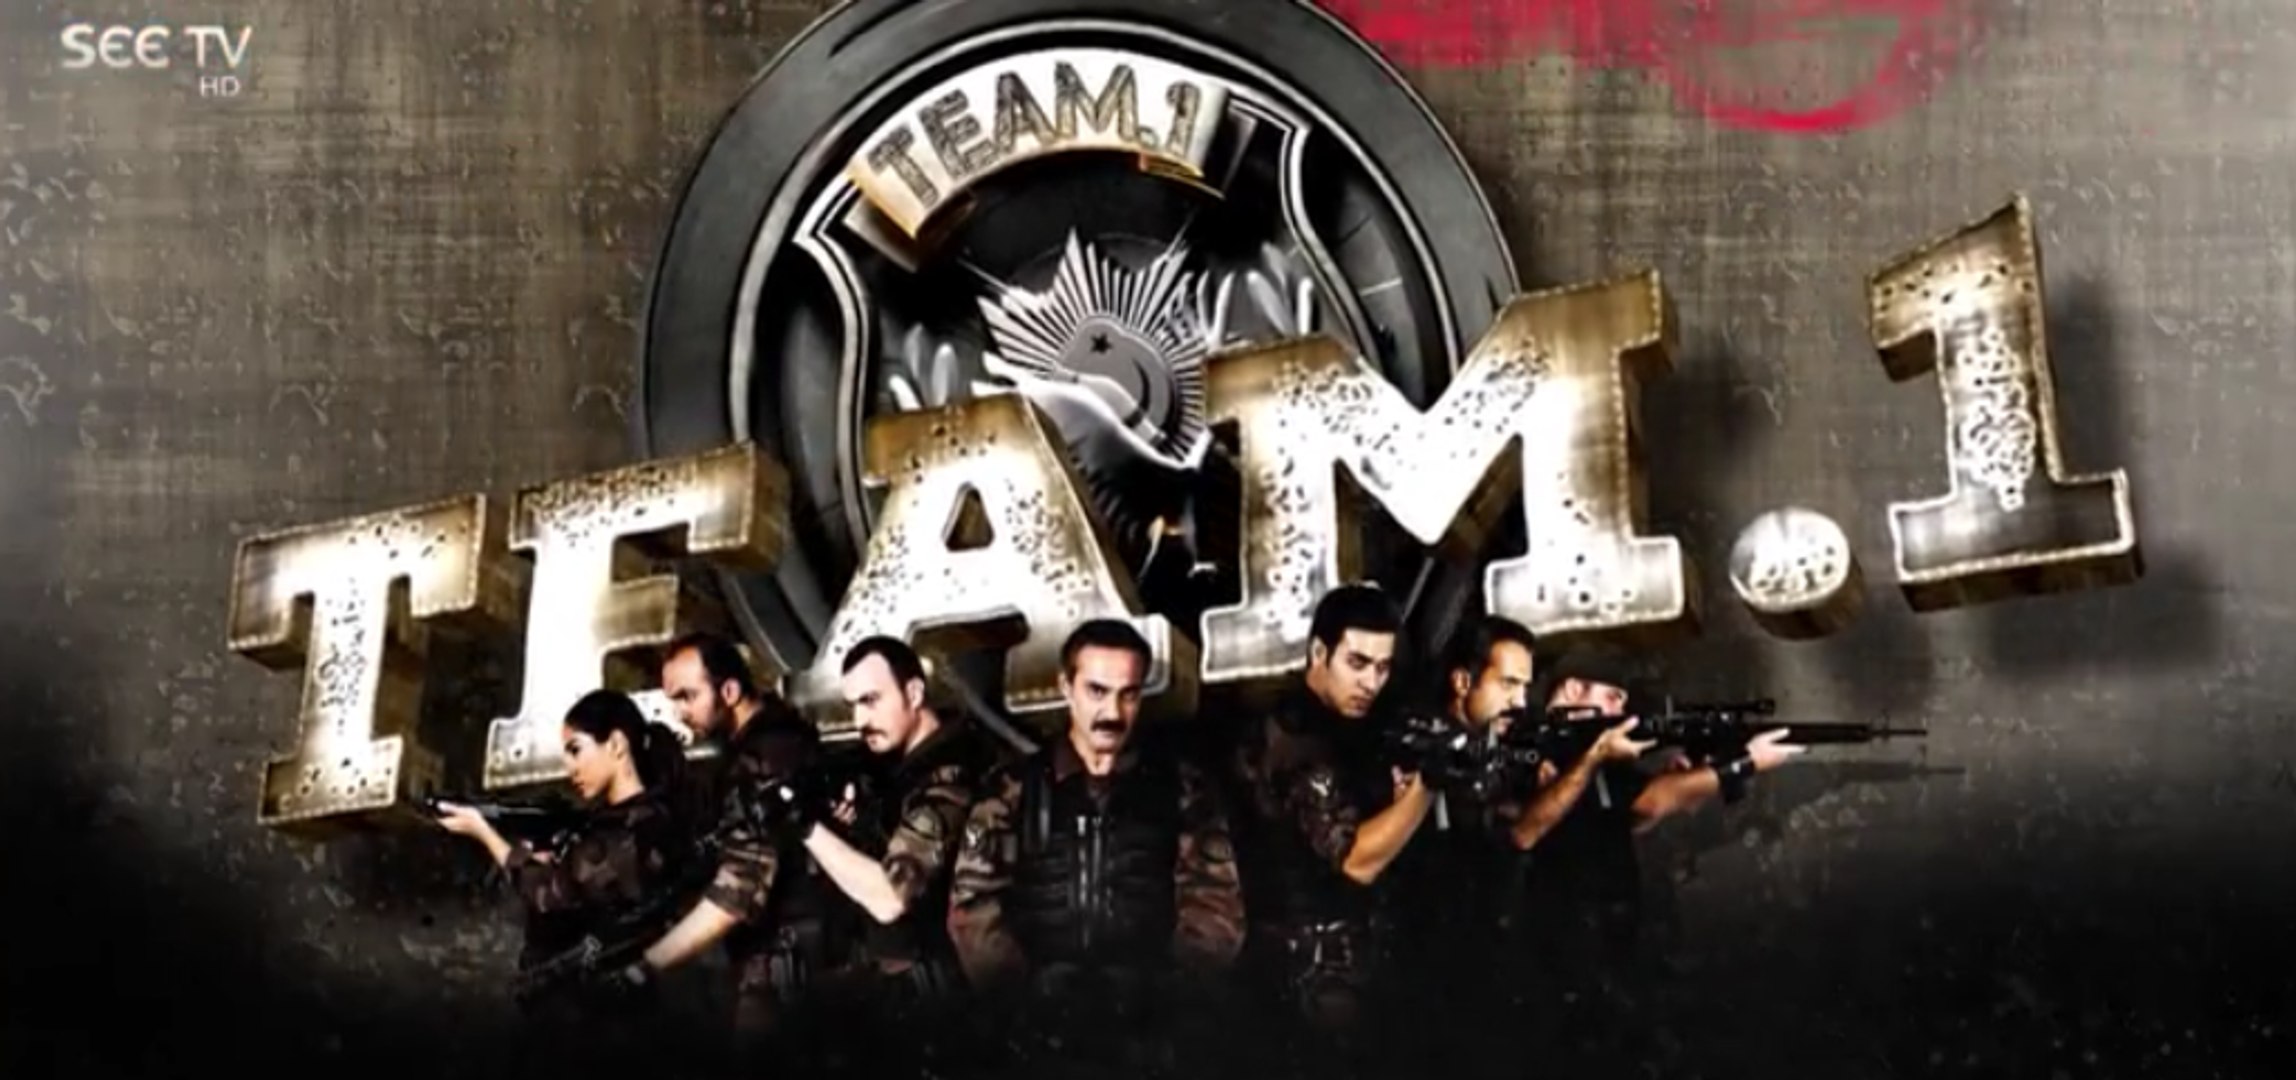 Team 1 Episode 2 13 Feb 16 Video Dailymotion